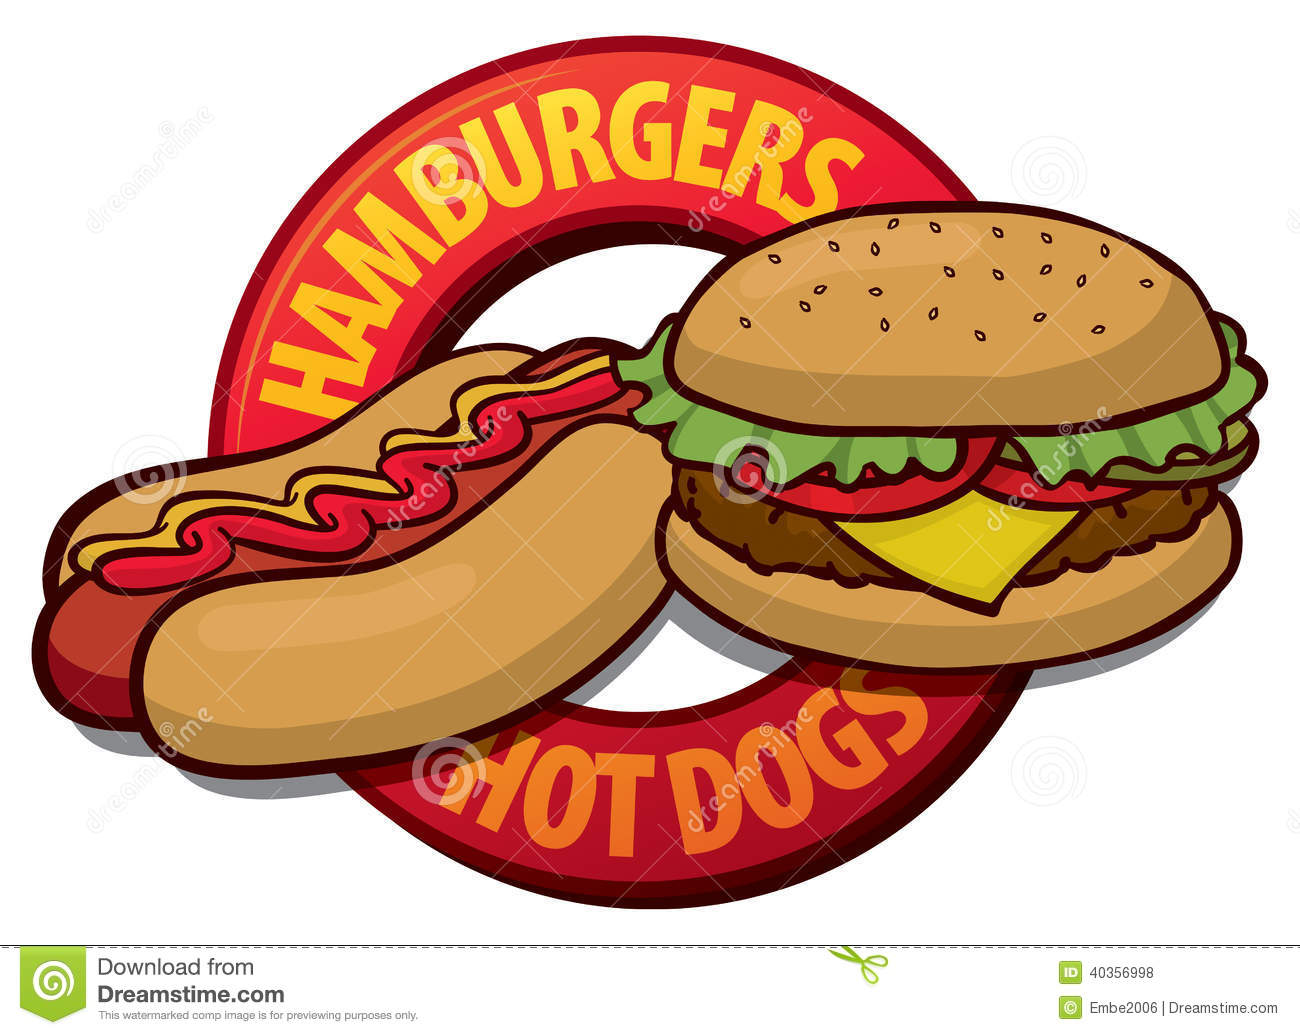 Png Hamburgers Hot Dogs - Hamburger Hot Dog Clip Art, Transparent background PNG HD thumbnail